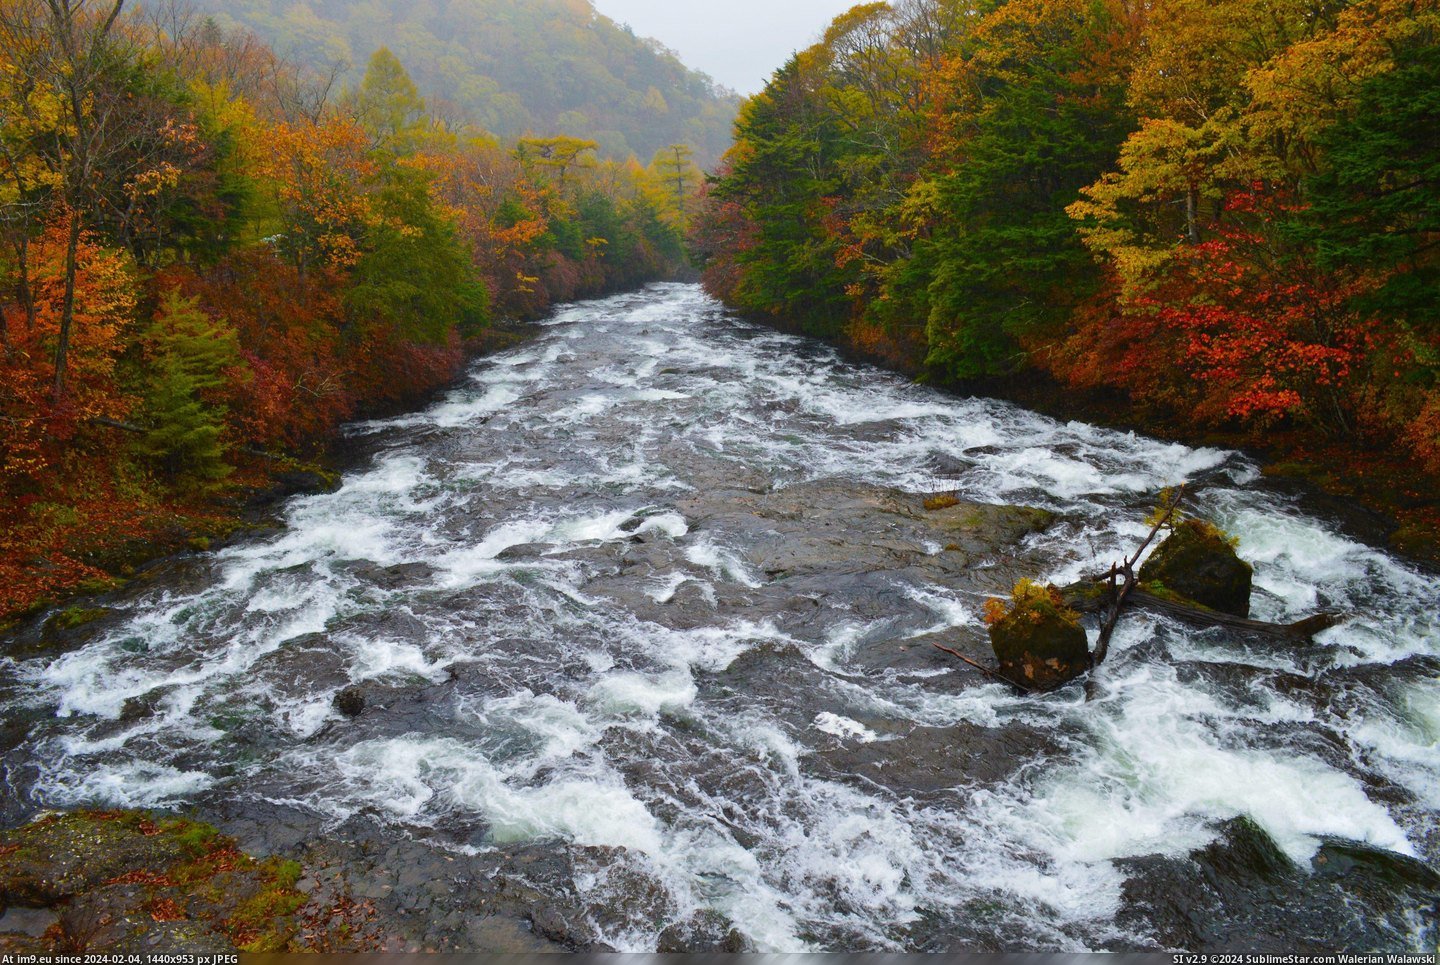 #Japan #Mountain #Autumn #Nikko #Stream #Leaves [Earthporn] Autumn Leaves by Mountain Stream - Nikko, Japan [3609x2400] Pic. (Bild von album My r/EARTHPORN favs))